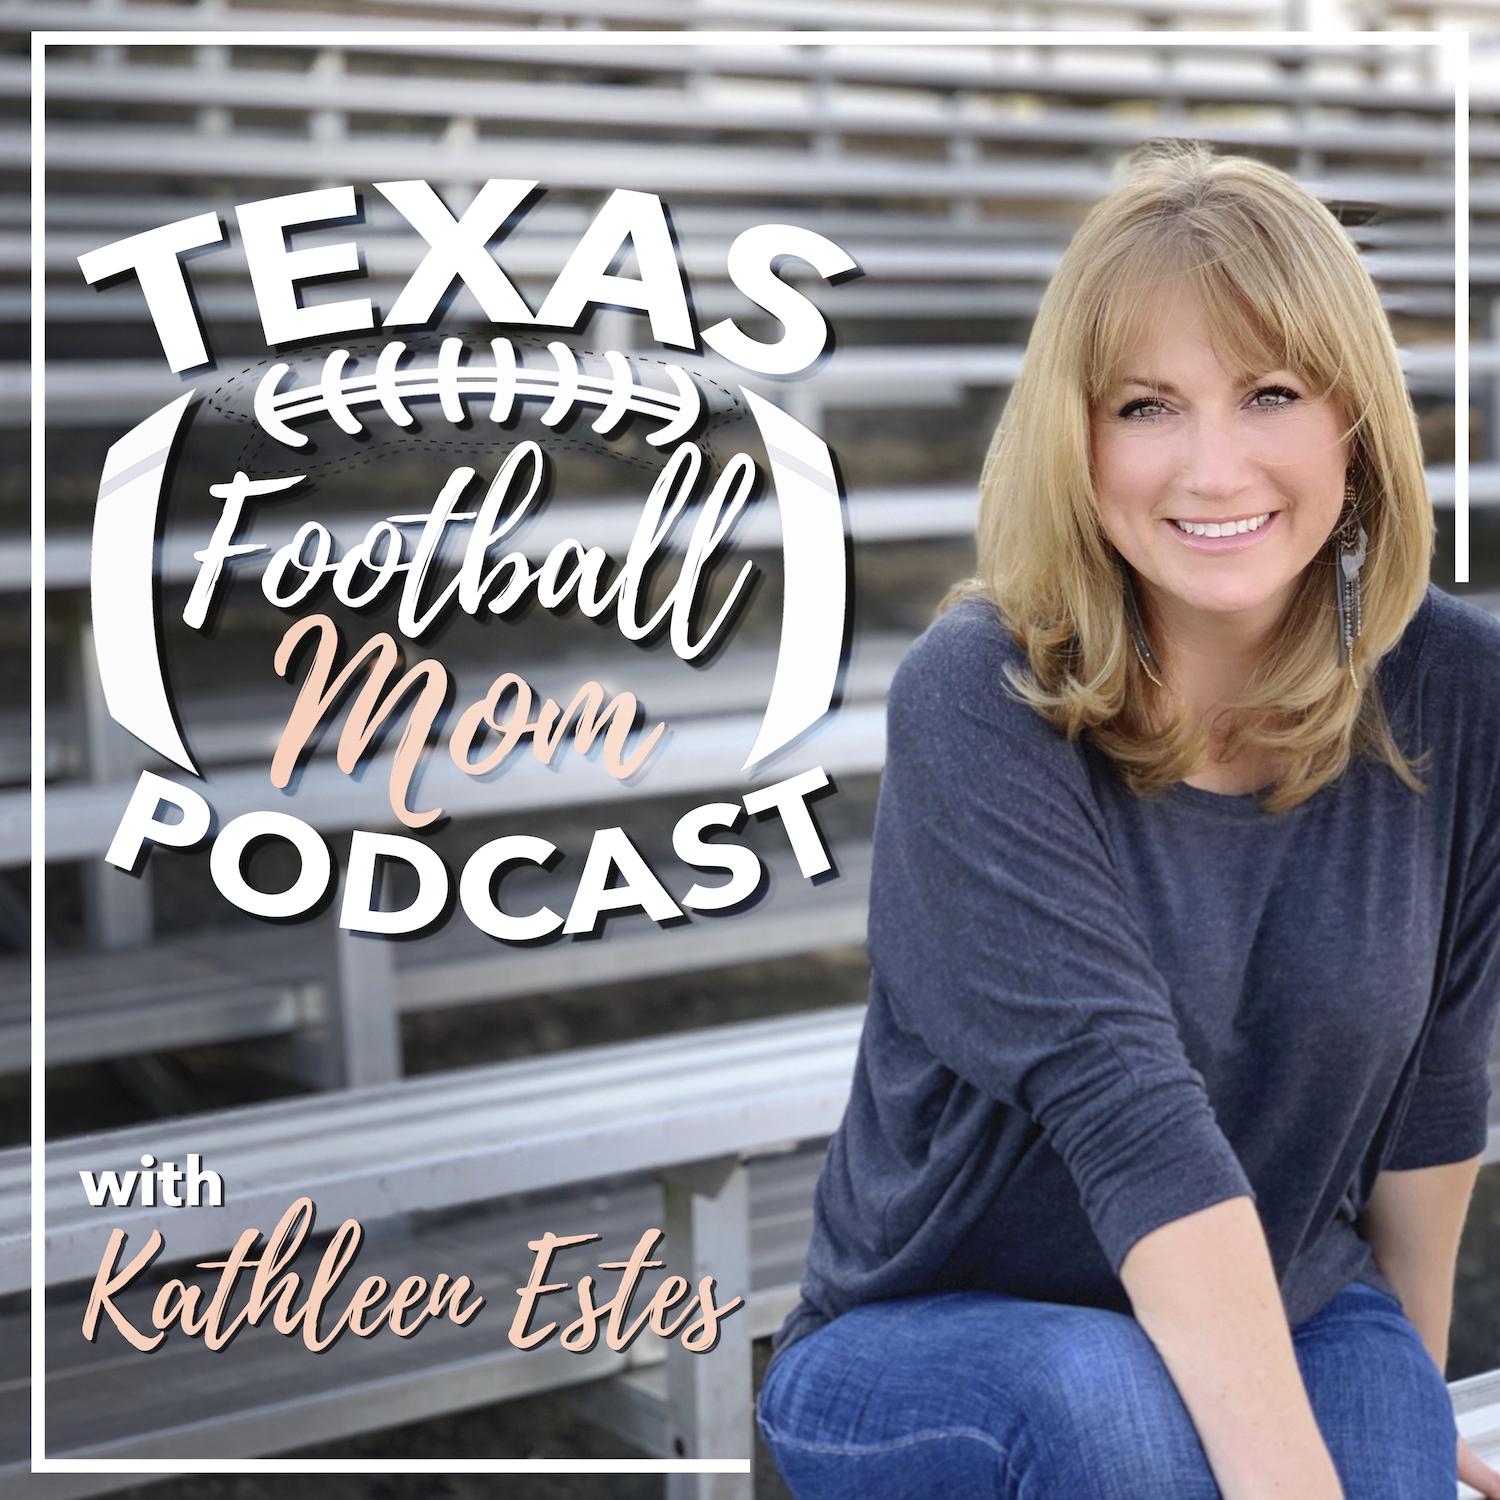 Texas Football Mom with Kathleen Estes